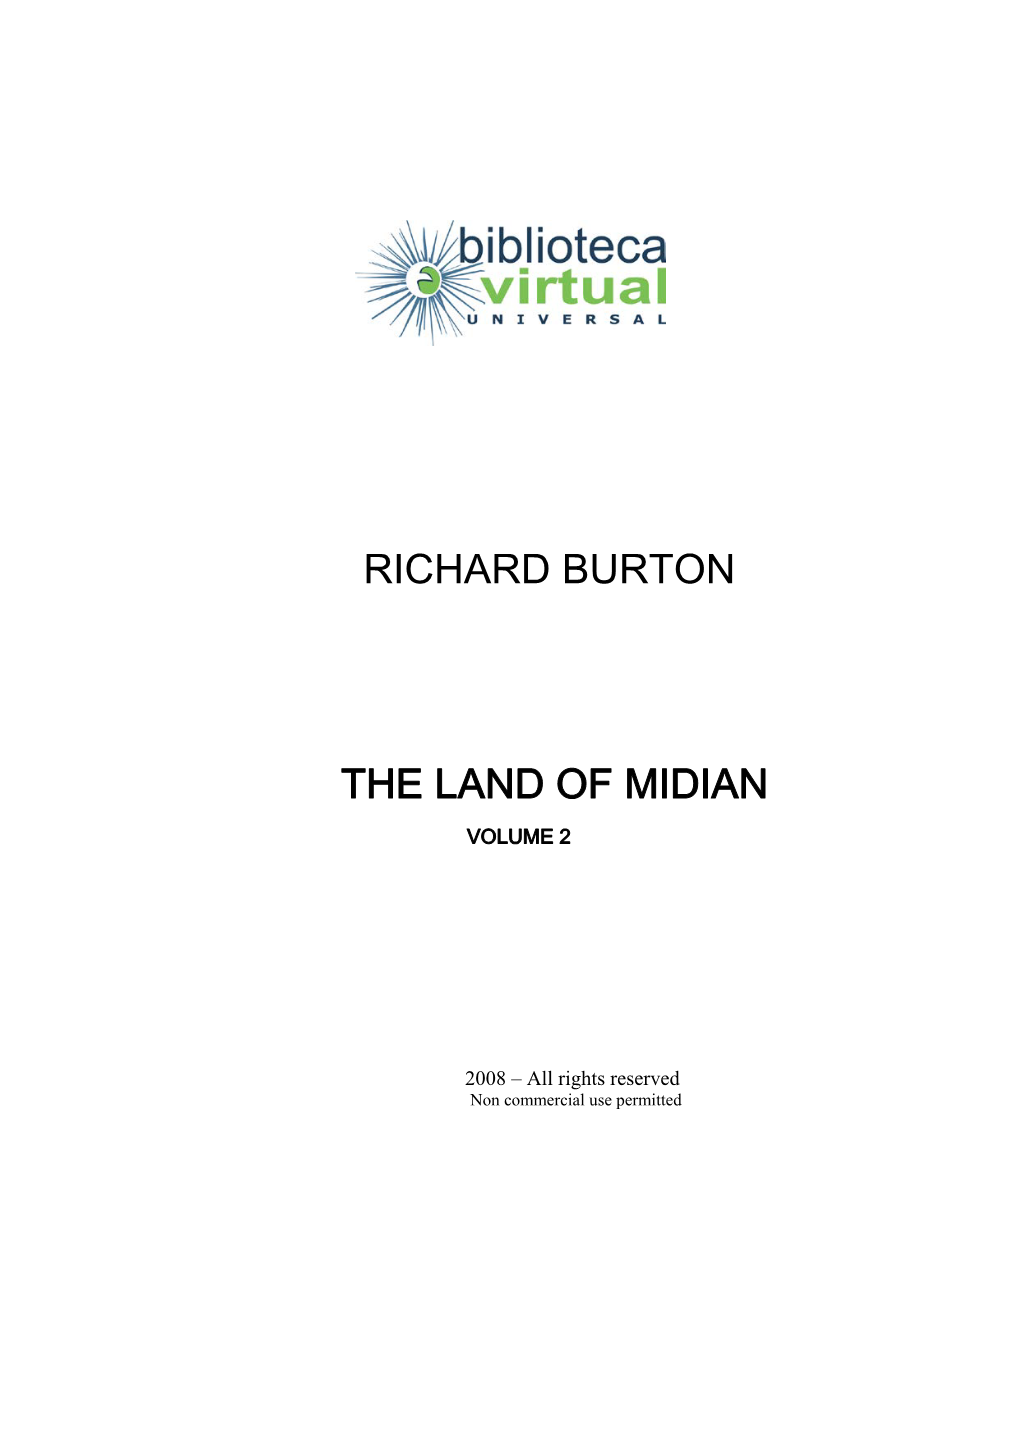 Richard Burton the Land of Midian